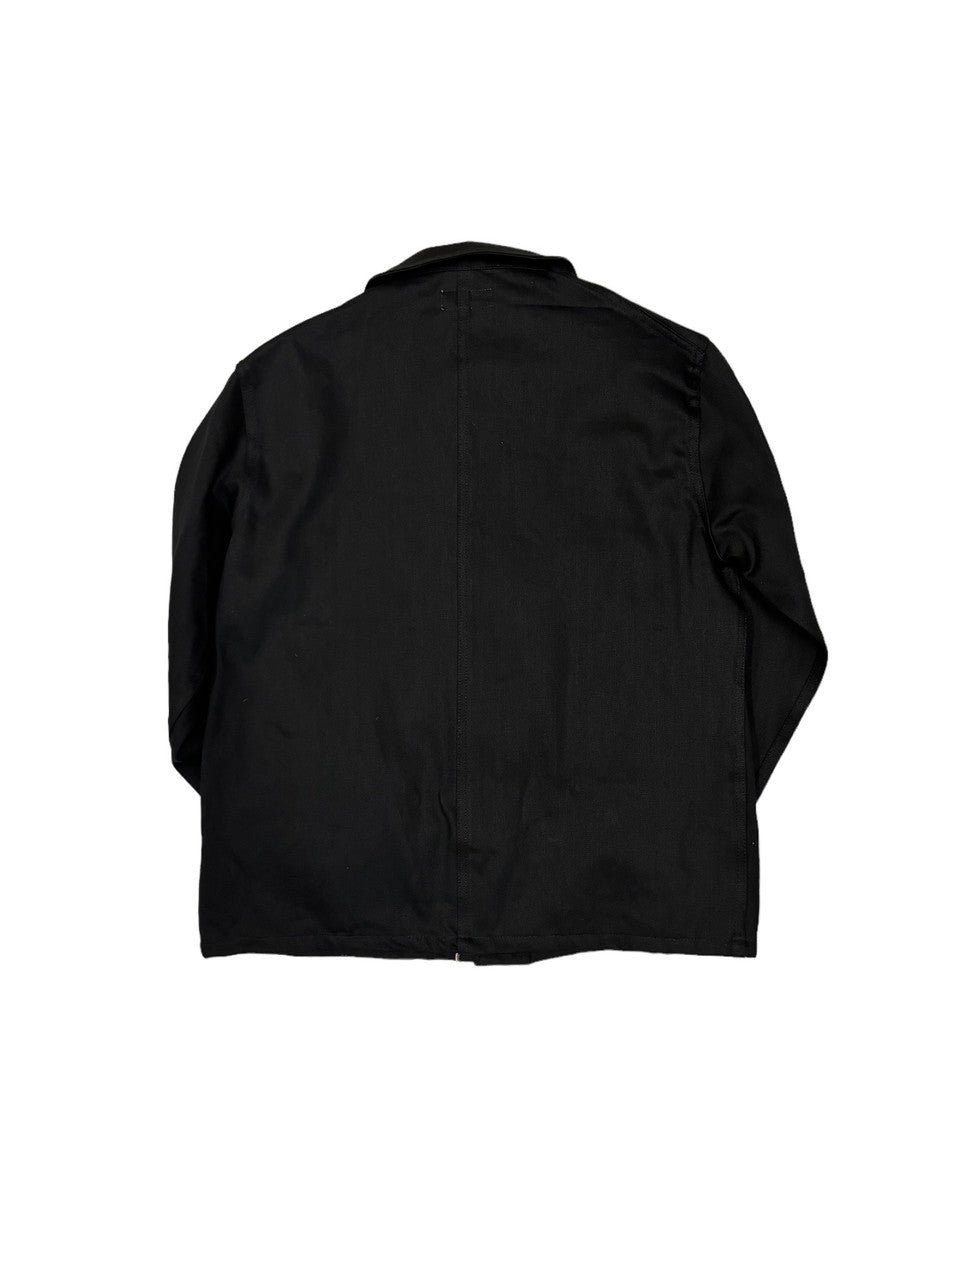 Tellason Grayford 13 oz Selvedge Denim Jacket (Black)